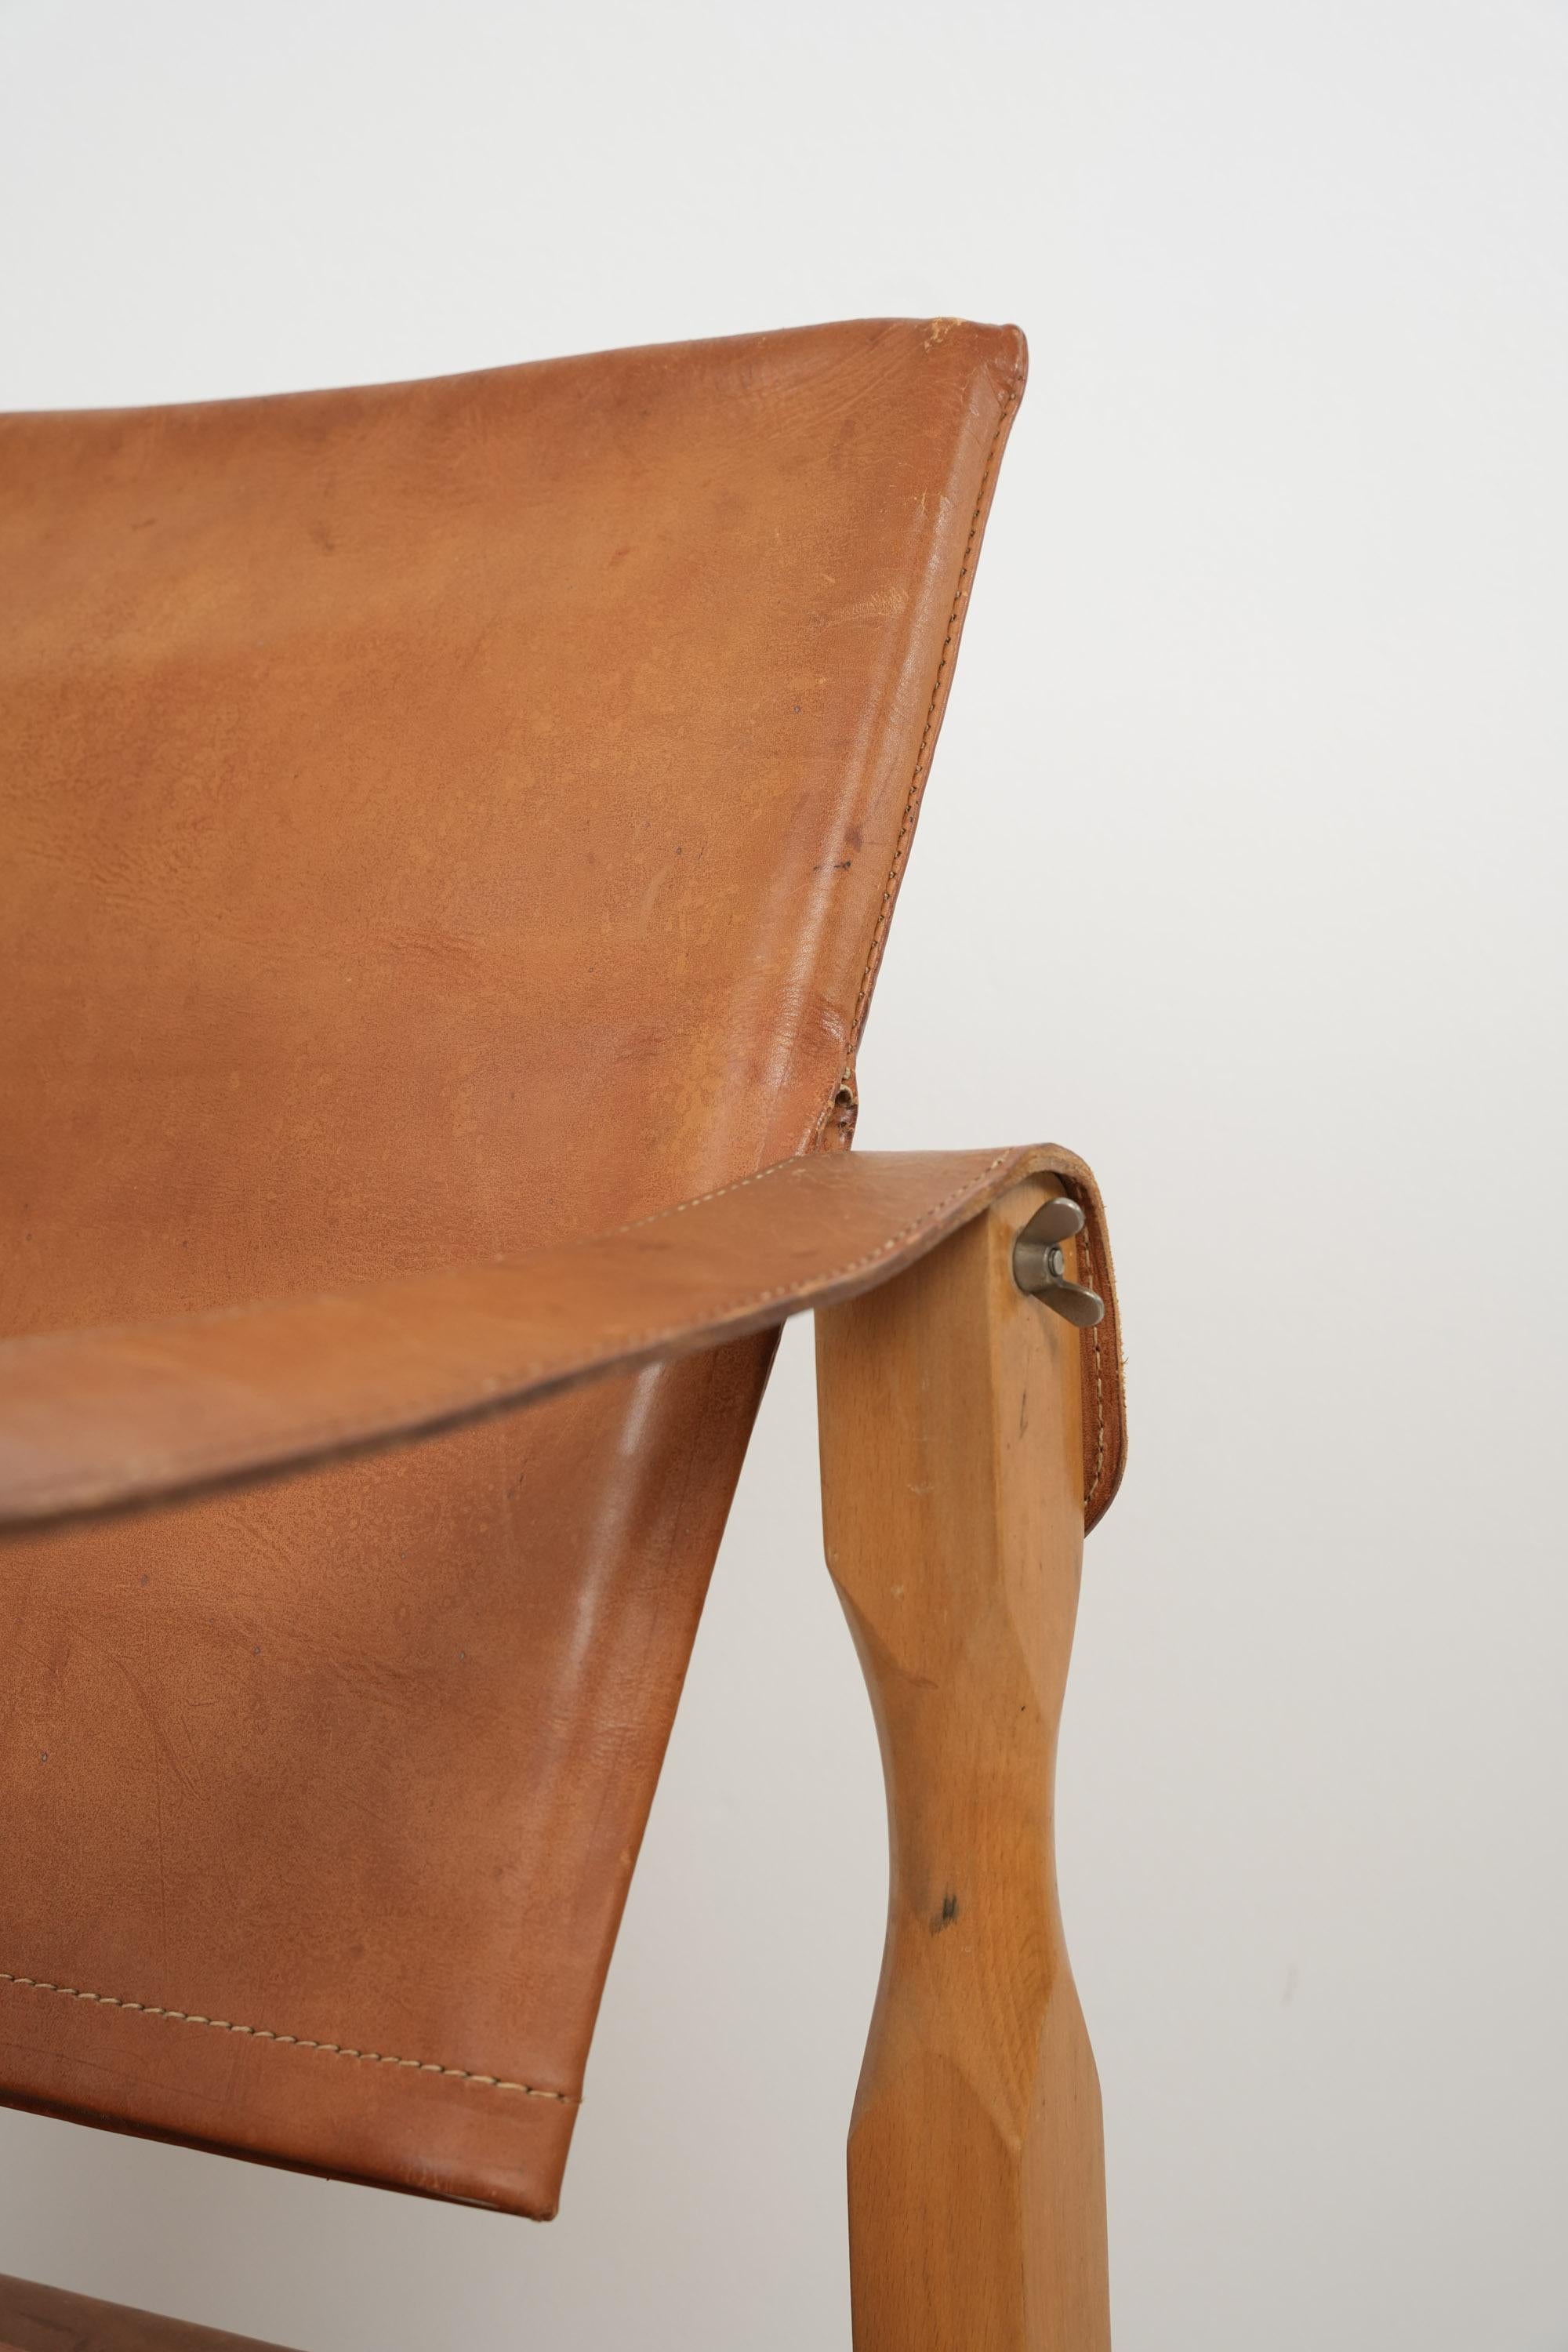 Wilhelm Kienzle Leather Safari Chair 1950s For Sale 1